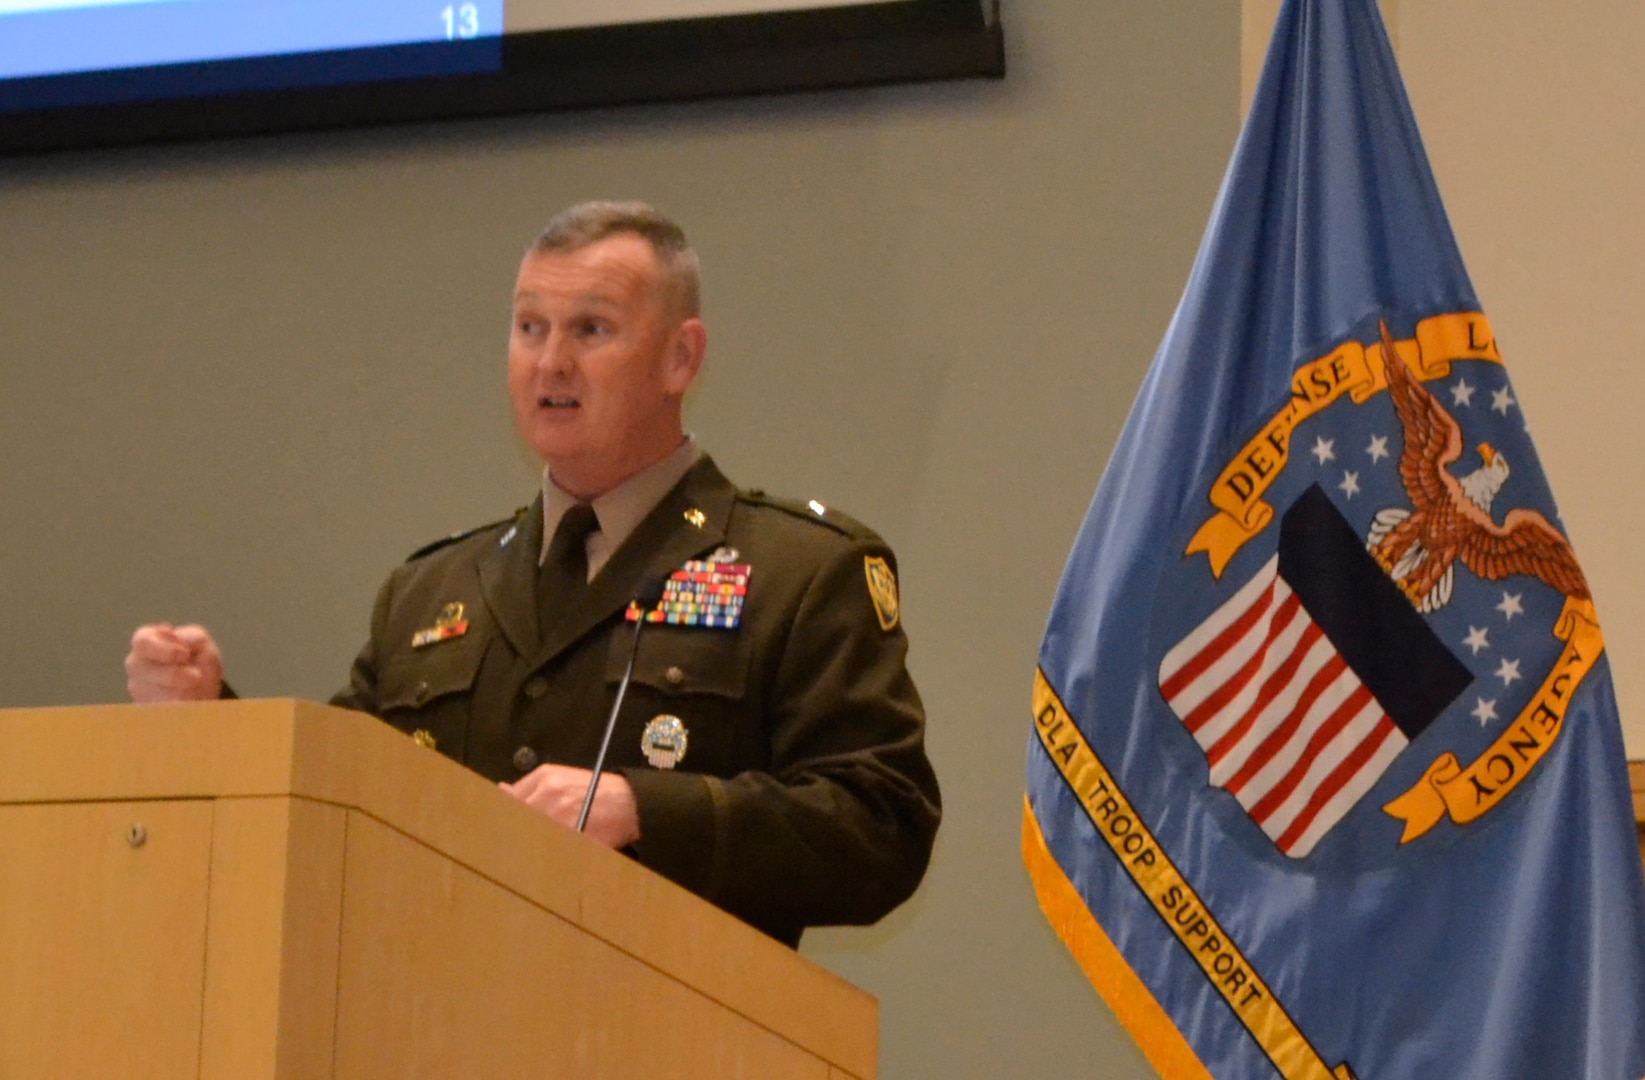 Army man talks at podium